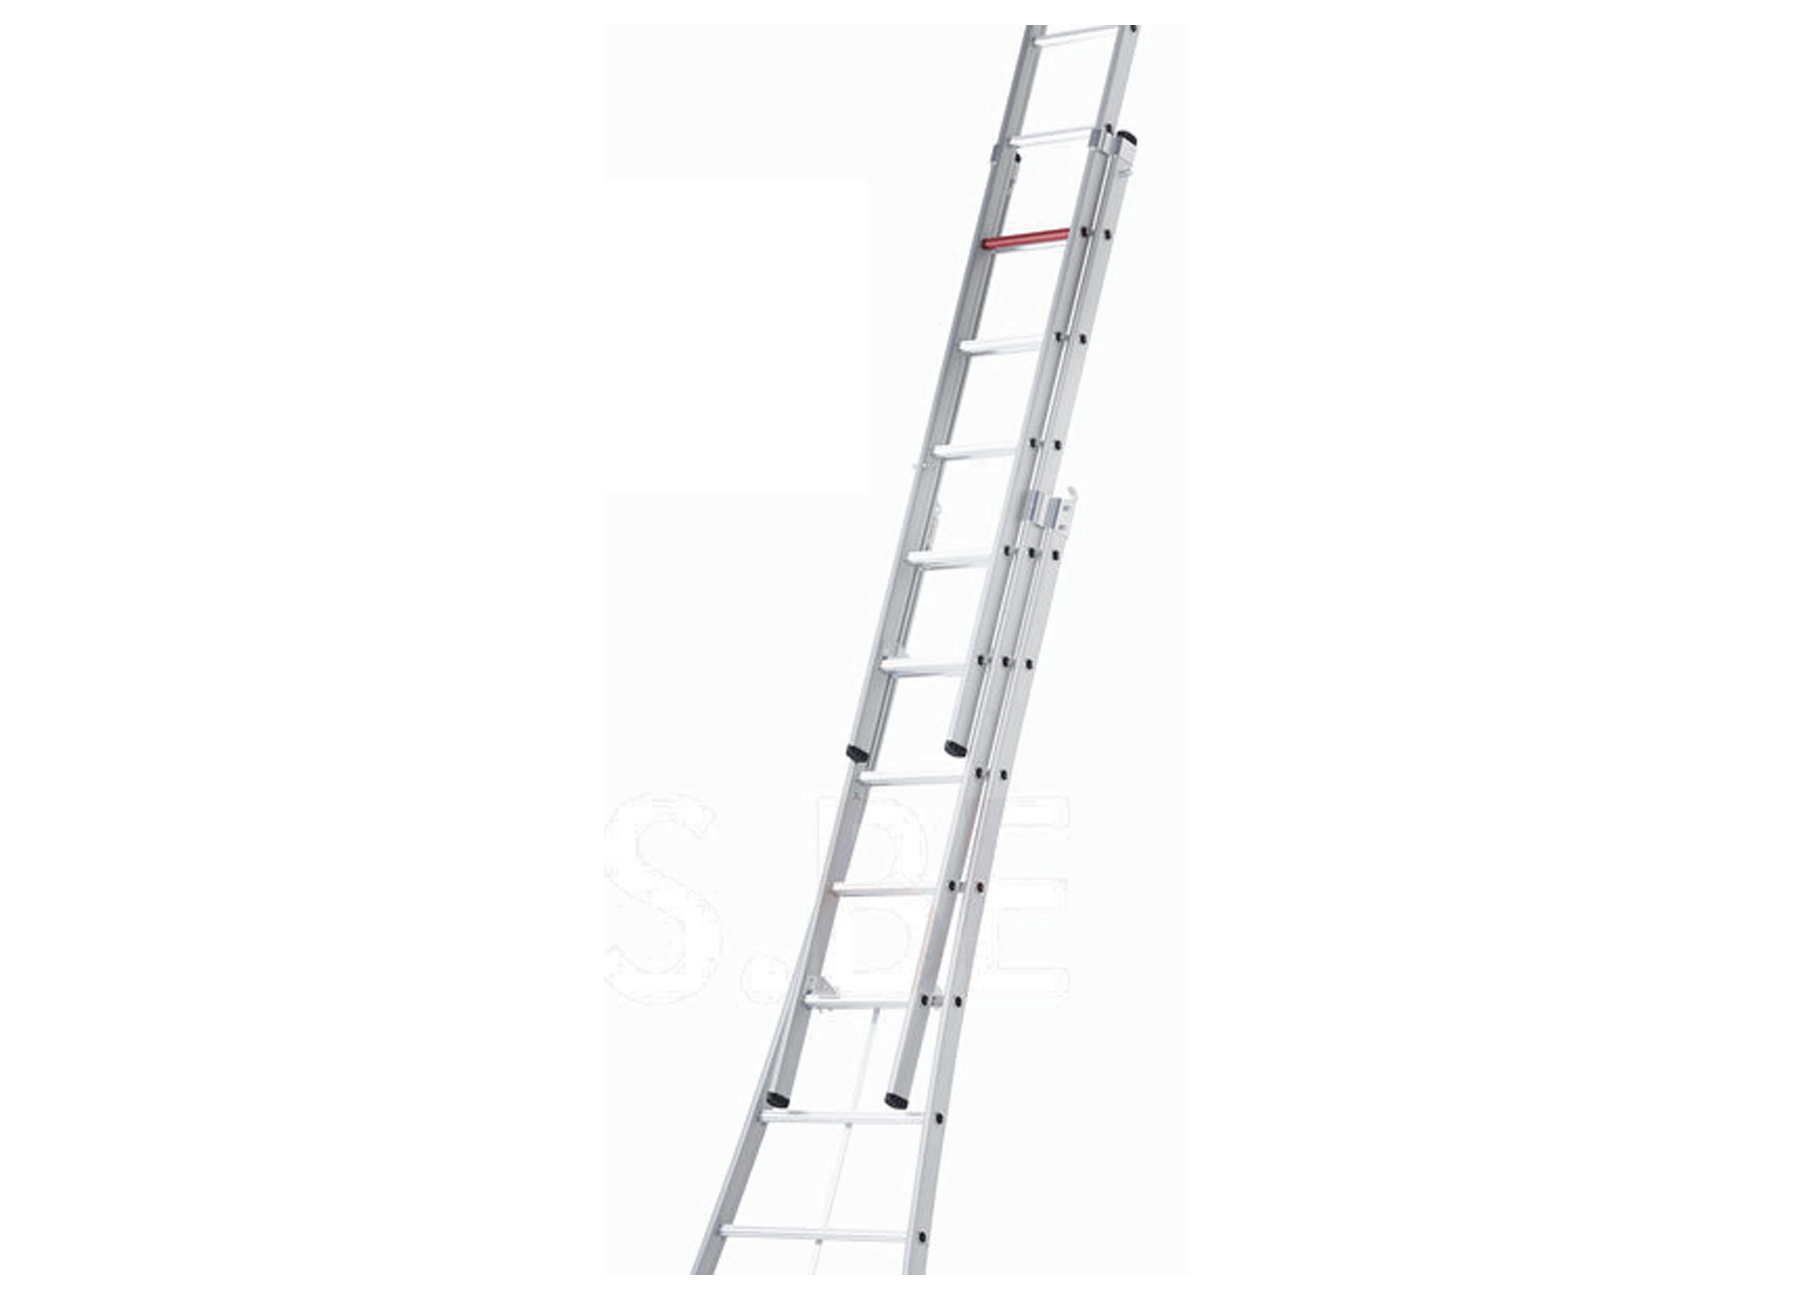 Altrex Ventoux Reformladder 3x8 - - diverse gereedschappen - ladders ladders professioneel gebruik altrex ventoux reformladder 3x8